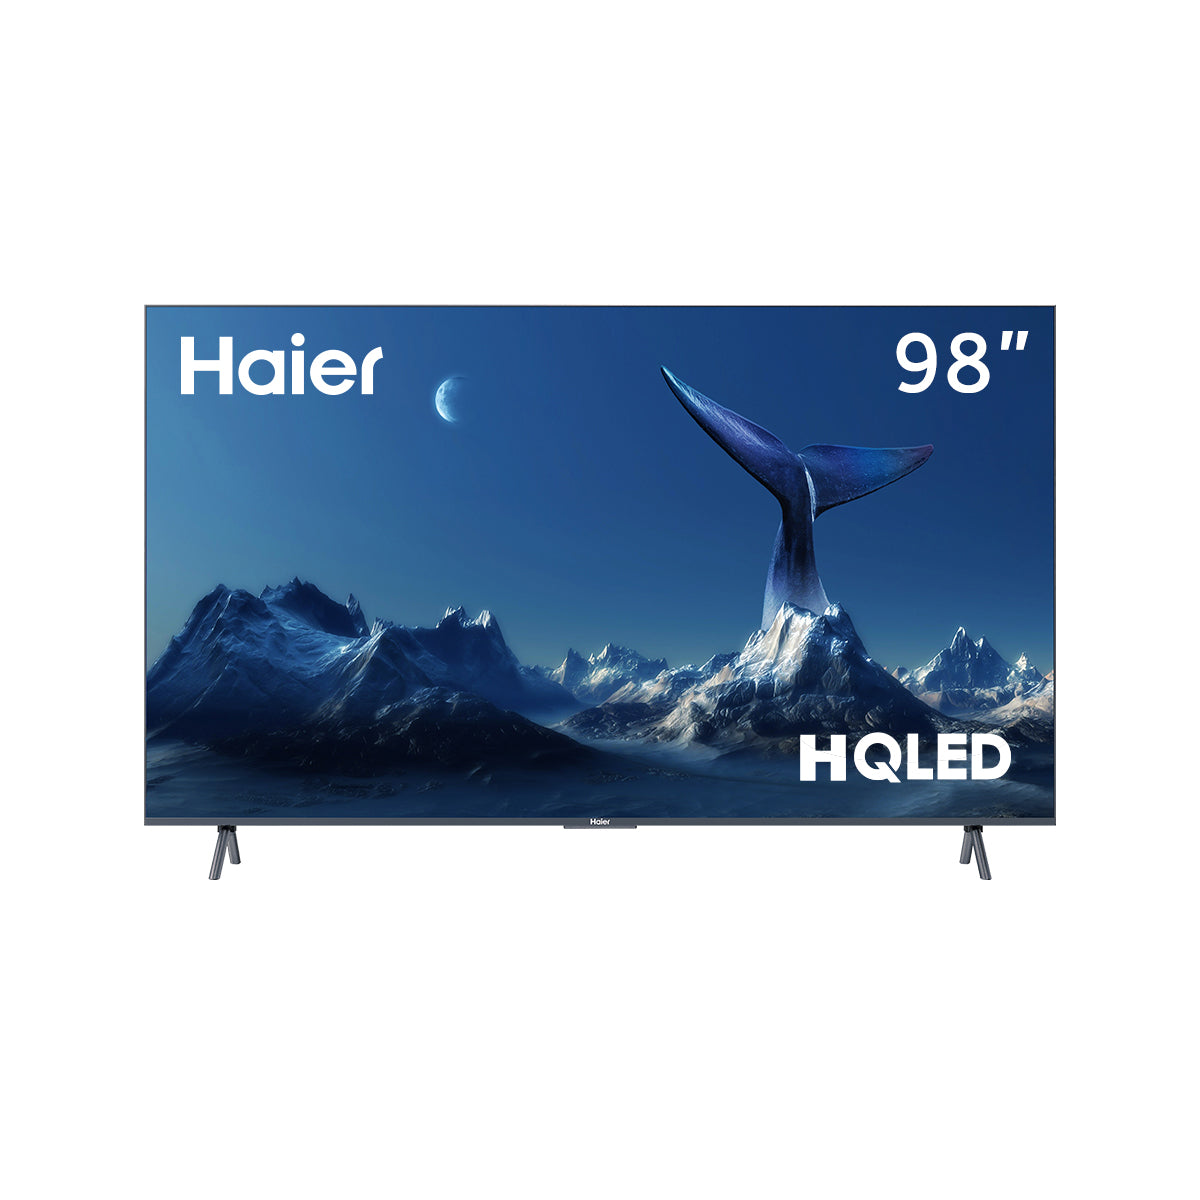 Haier LED 98" Smart - H98S900UX HQLED Google TV